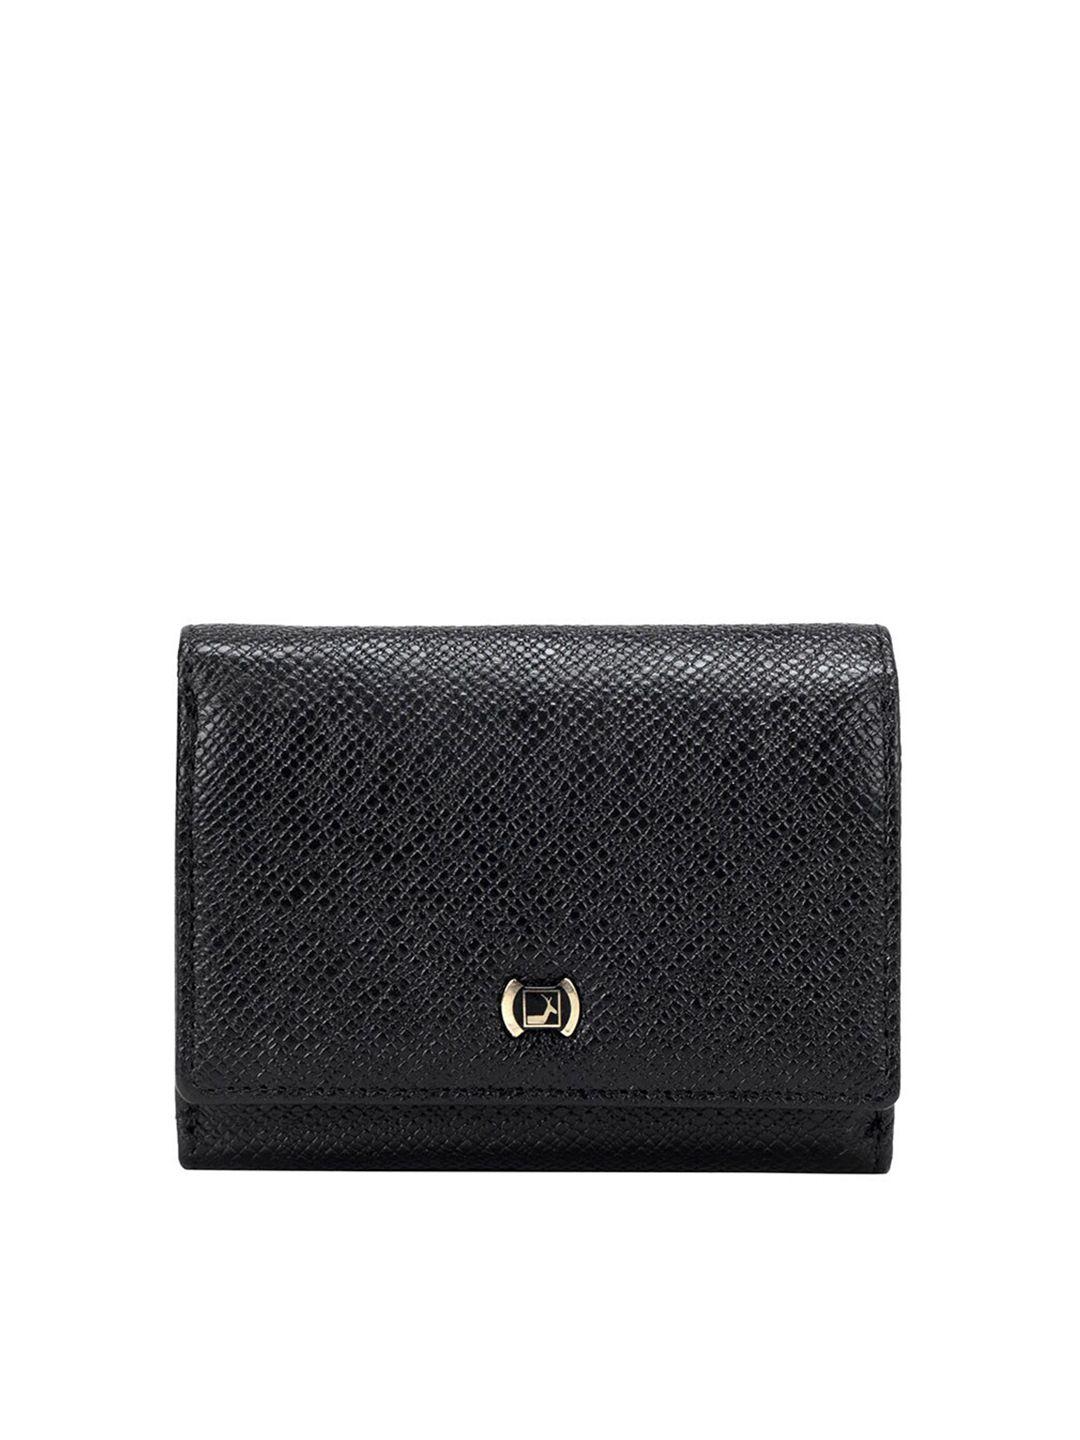 da milano women black textured leather three fold wallet